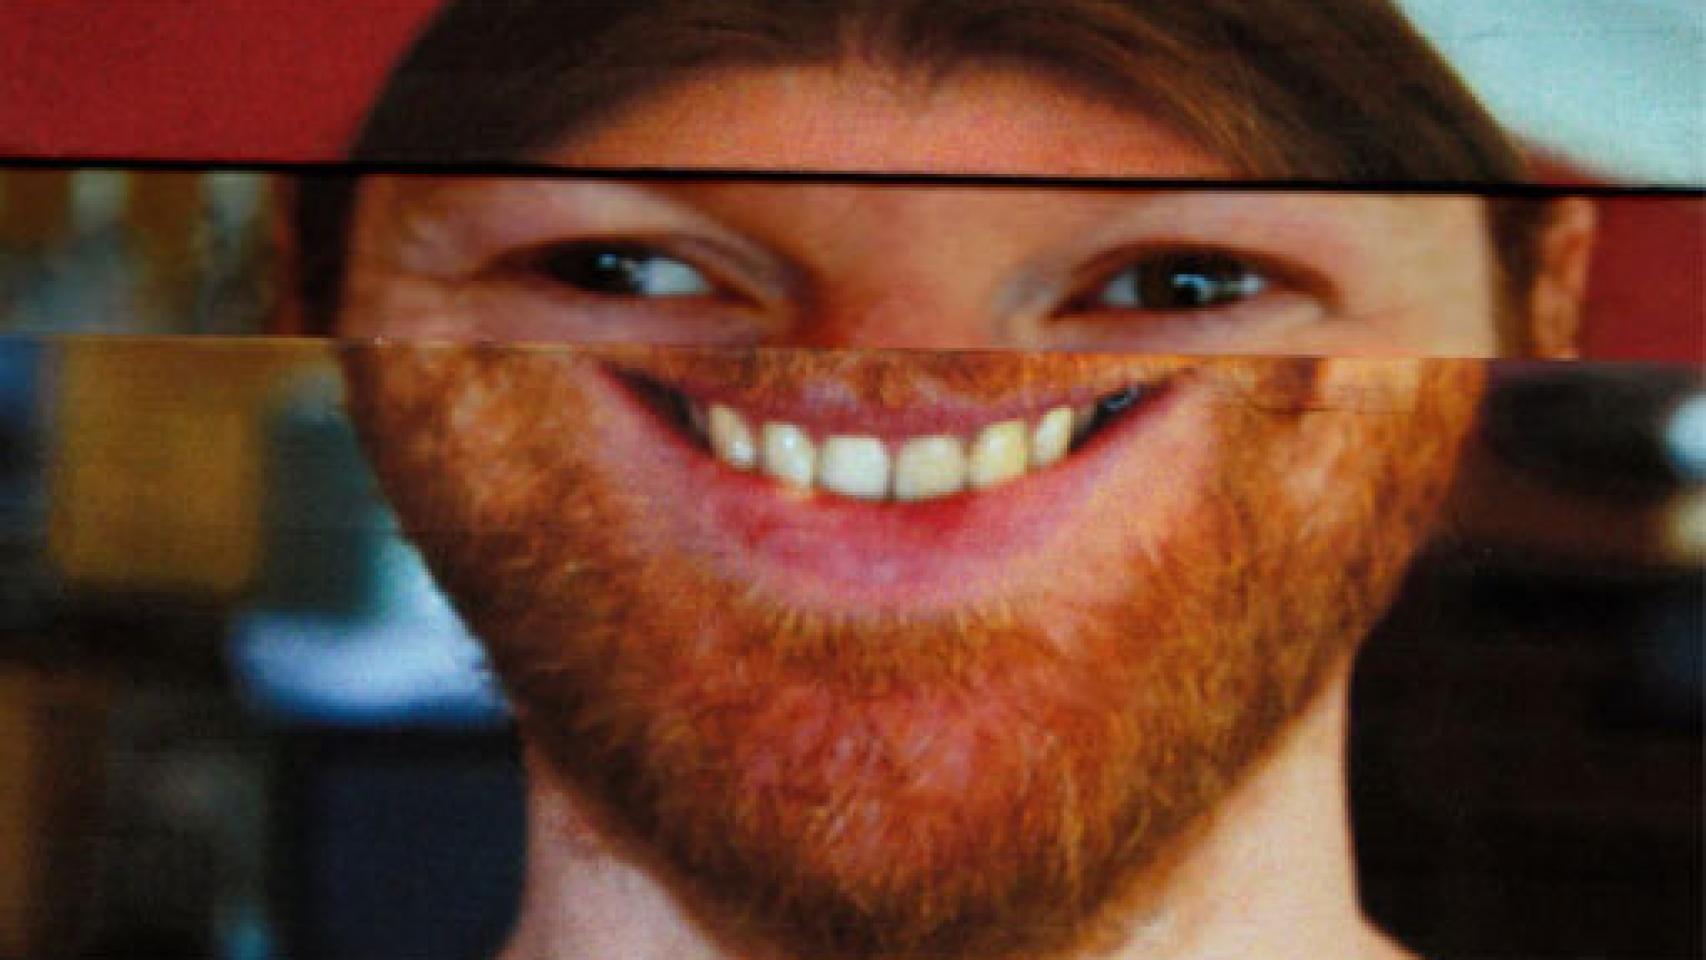 Image: Aphex Twin, lord del valle inquietante